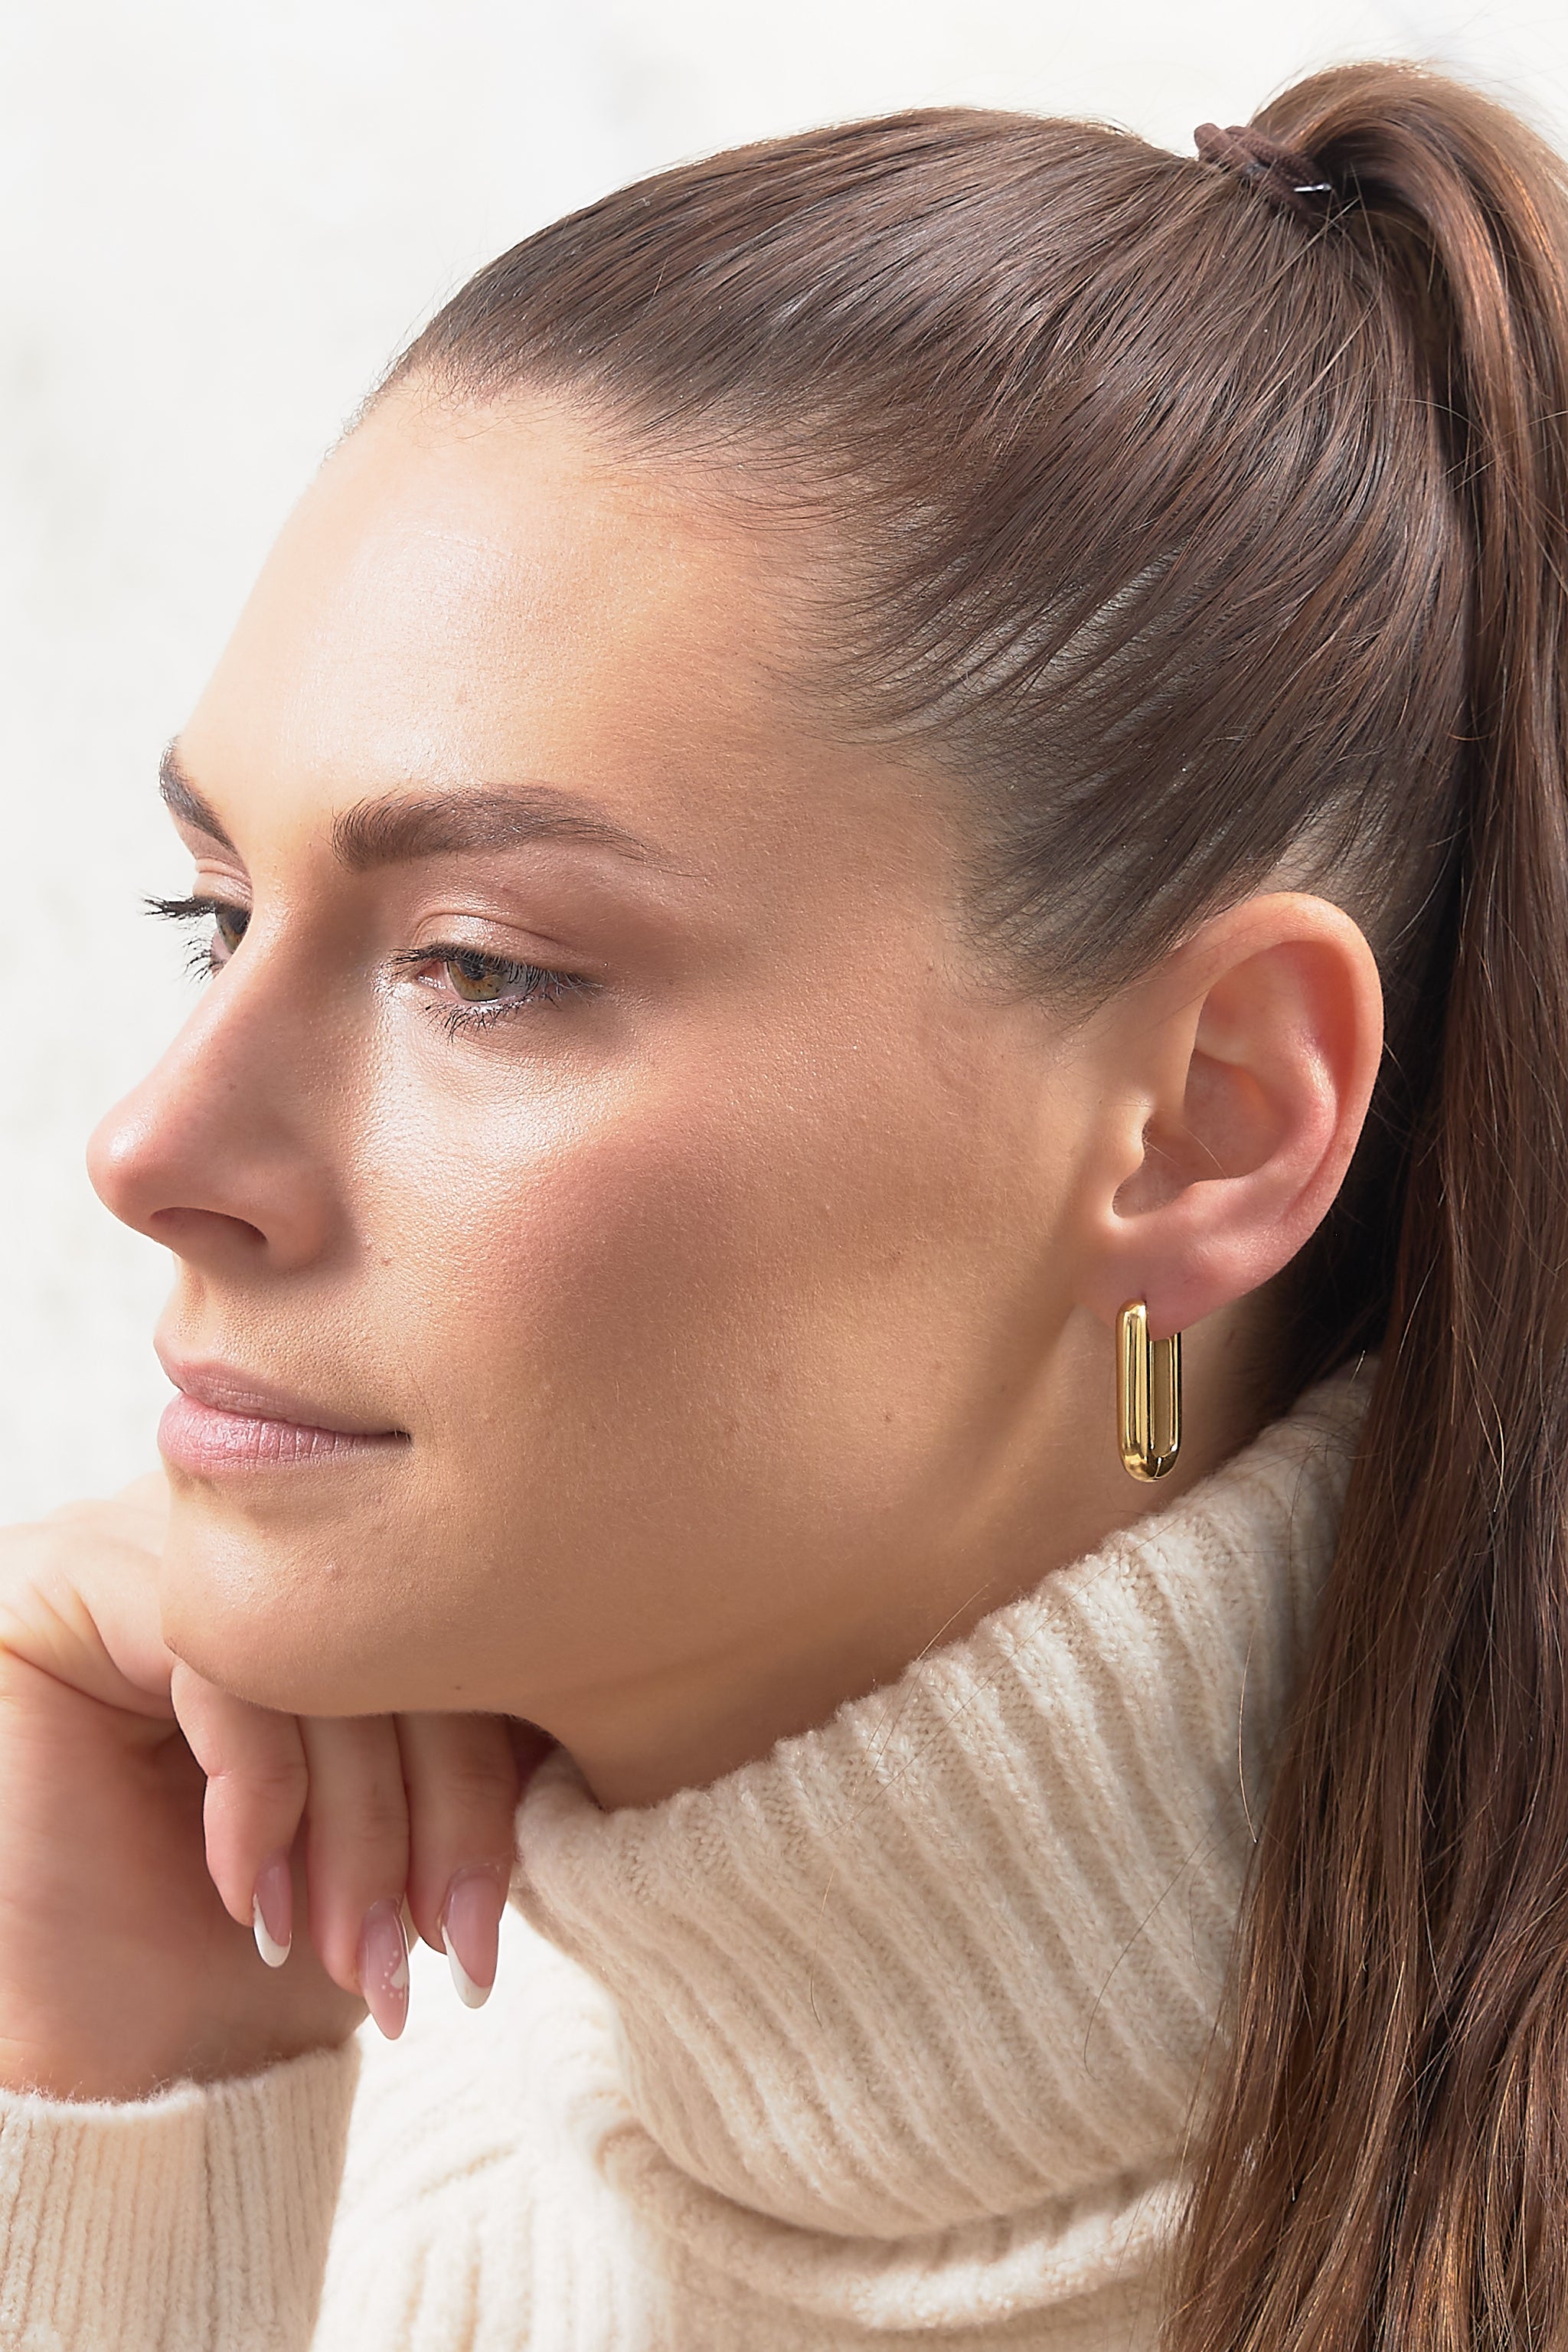 Rectangular earrings, gold colored